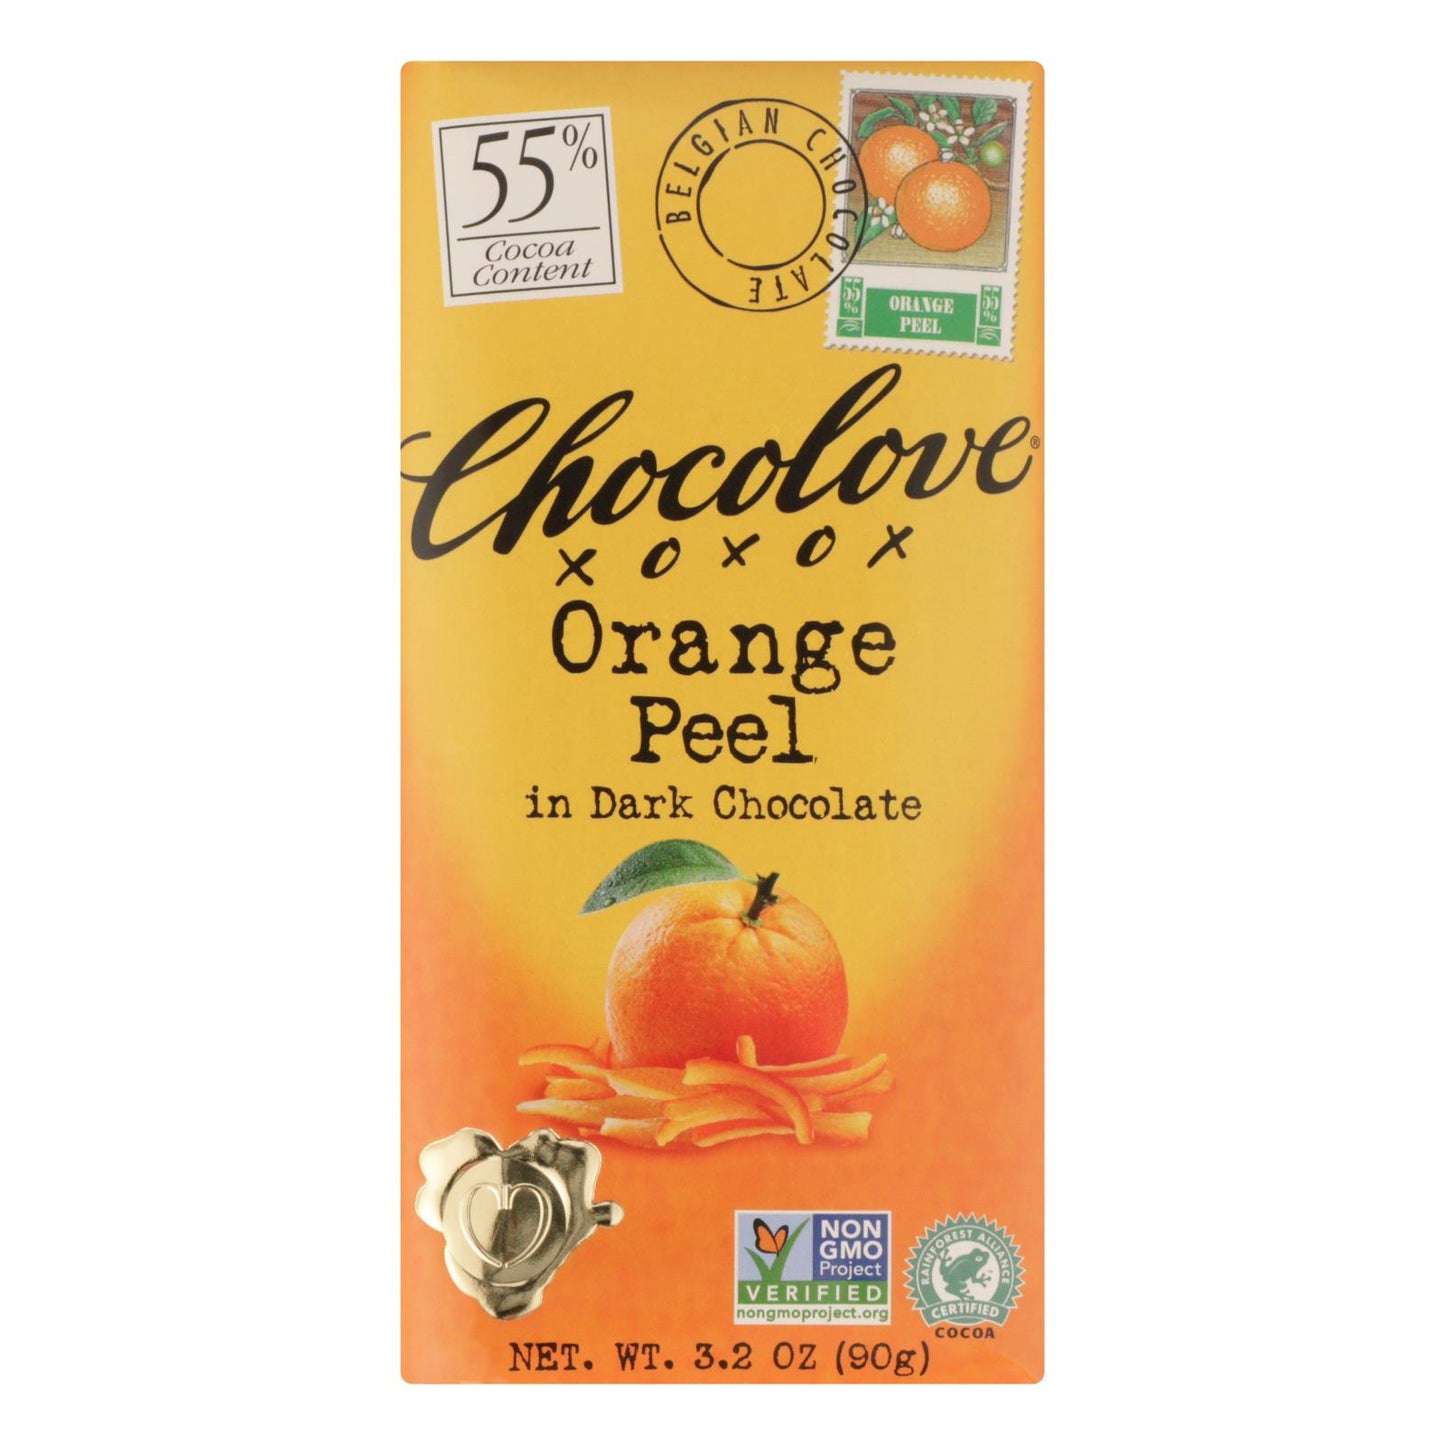 Chocolove Xoxox - Premium Chocolate Bar - Dark Chocolate - Orange Peel - 3.2 Oz Bars - Case Of 12